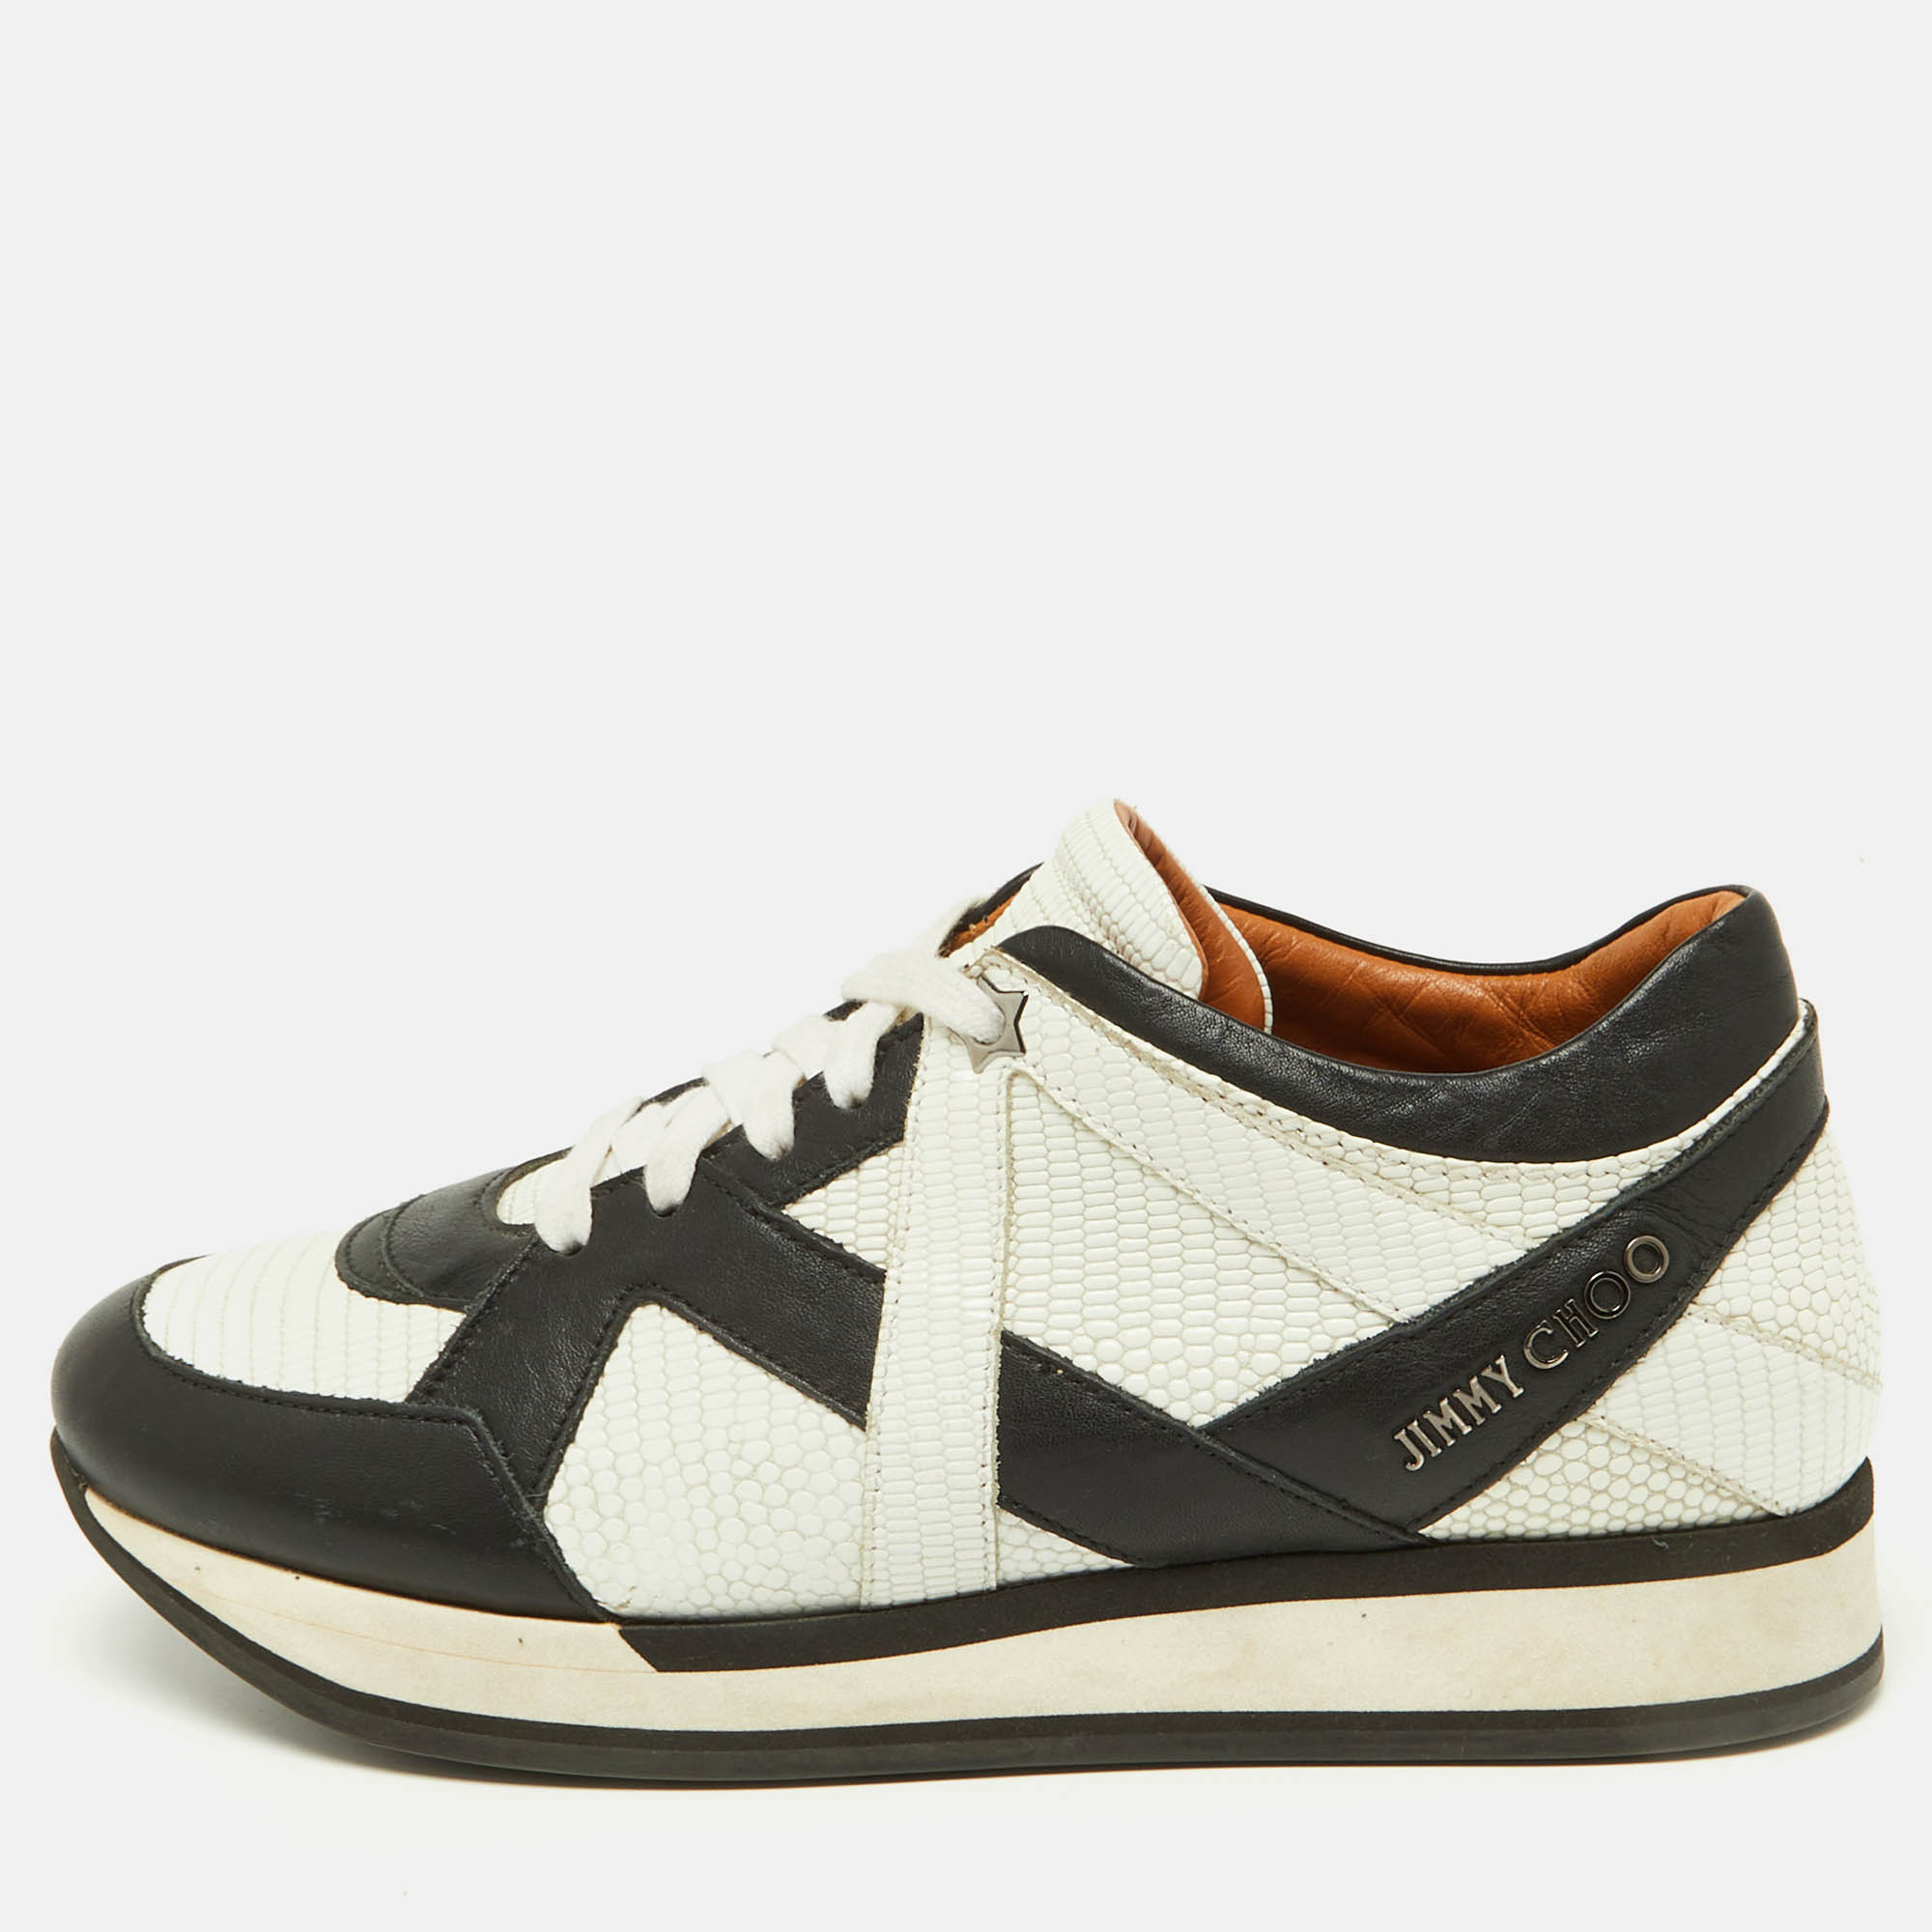 Jimmy choo black/white lizard embossed leather low top sneakers size 38.5